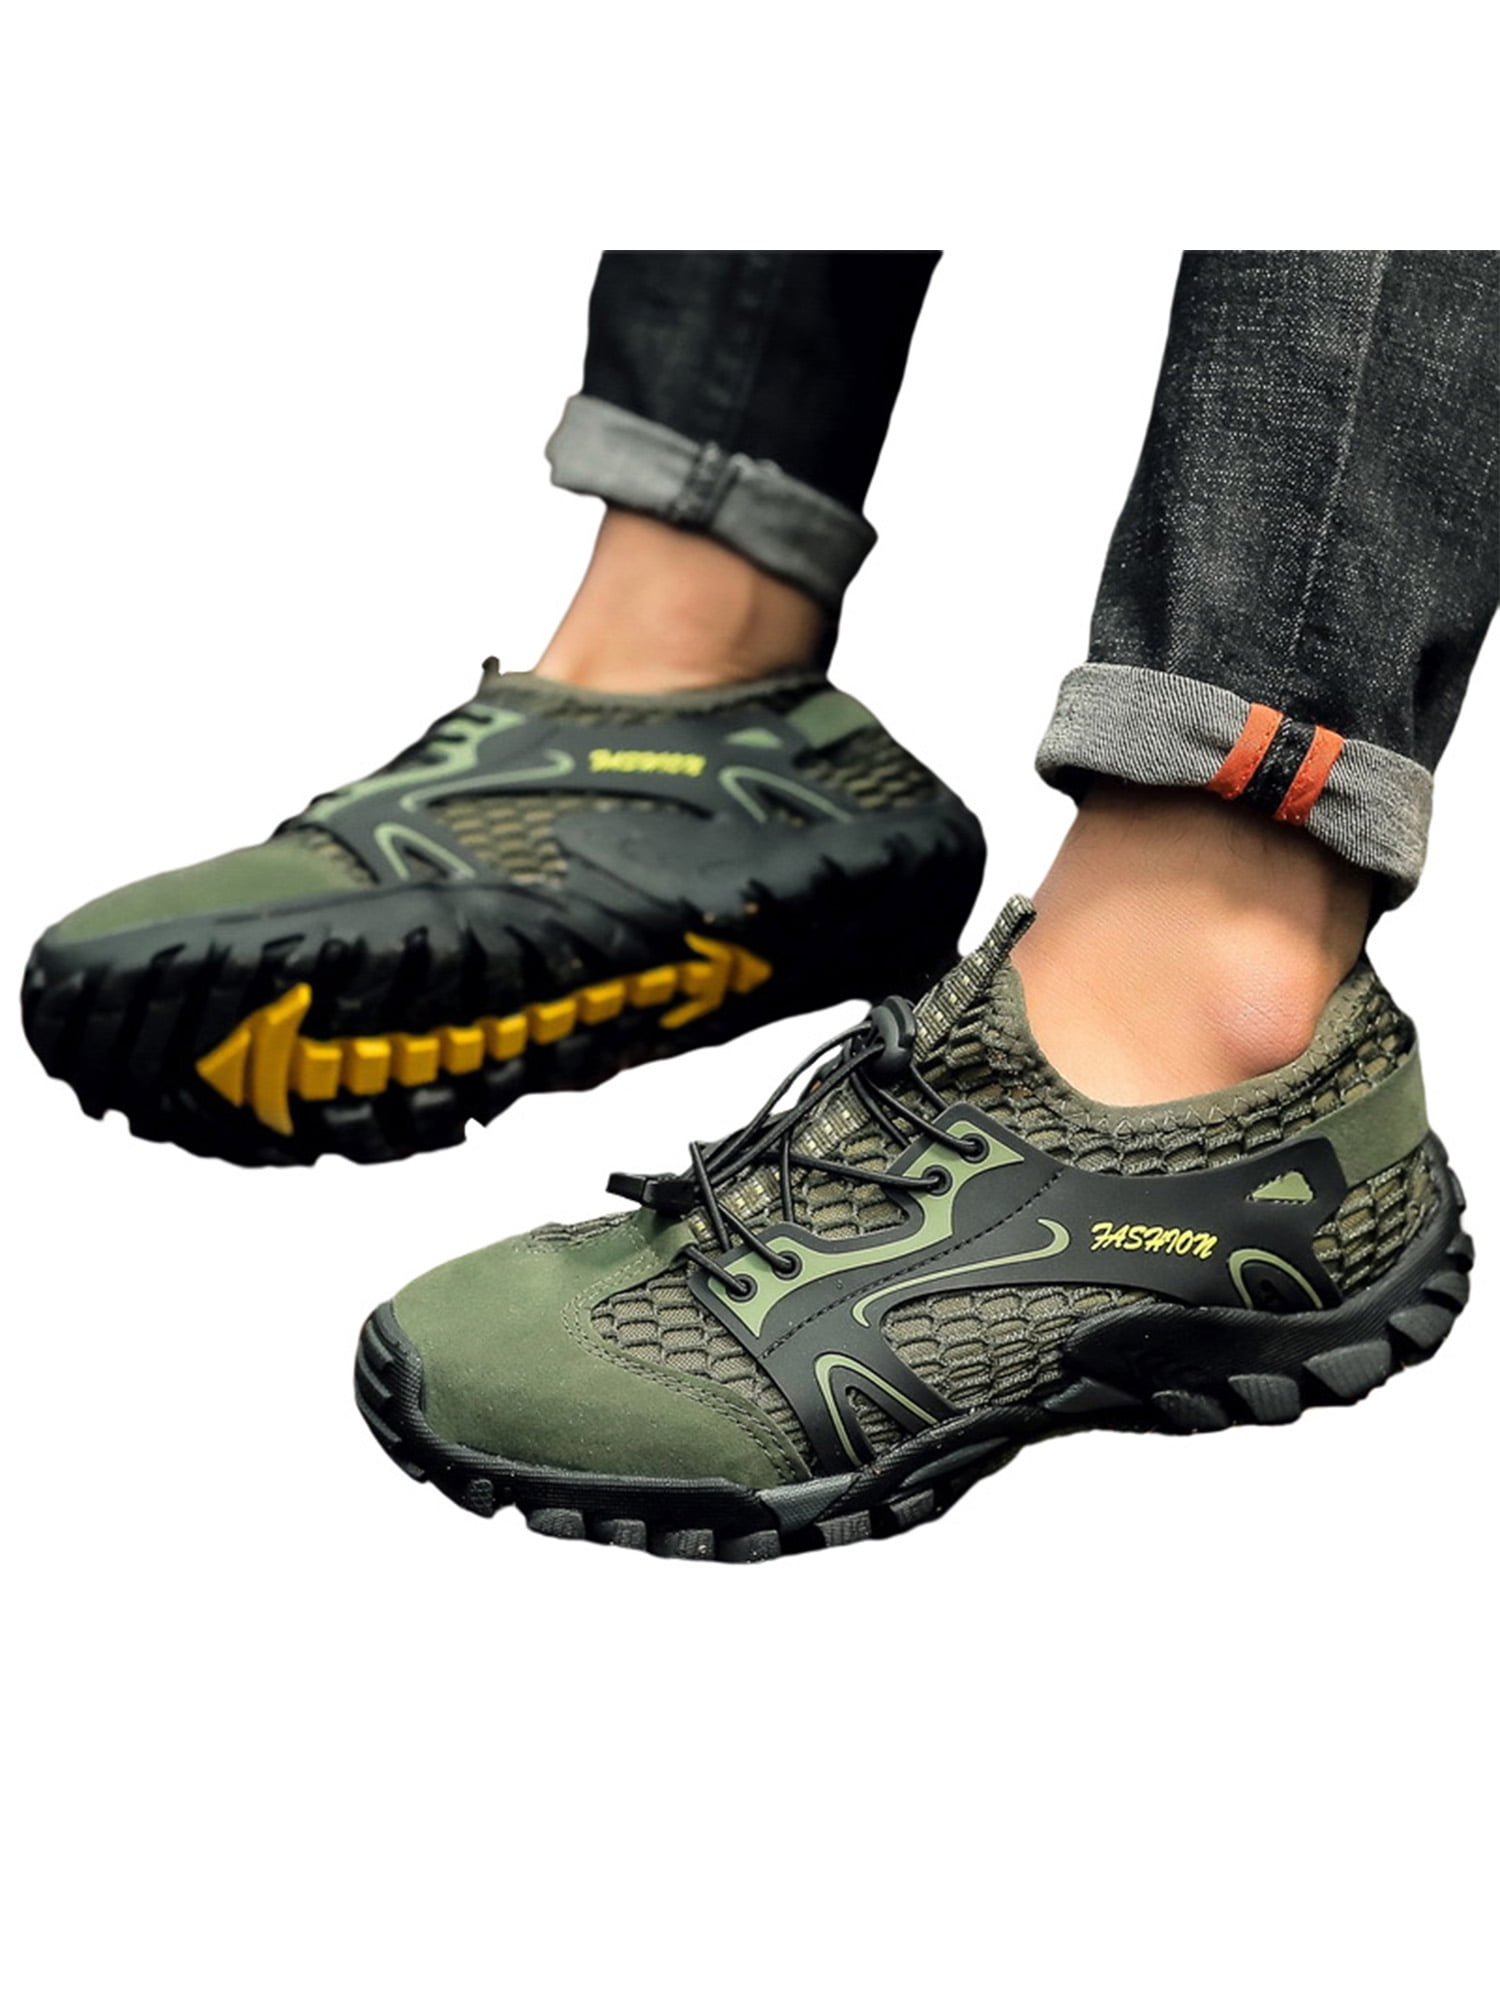 Wazshop Men's Trekking Trail Shoes Sports Mesh Waterproof Walking Outdoor Hiking Sandals